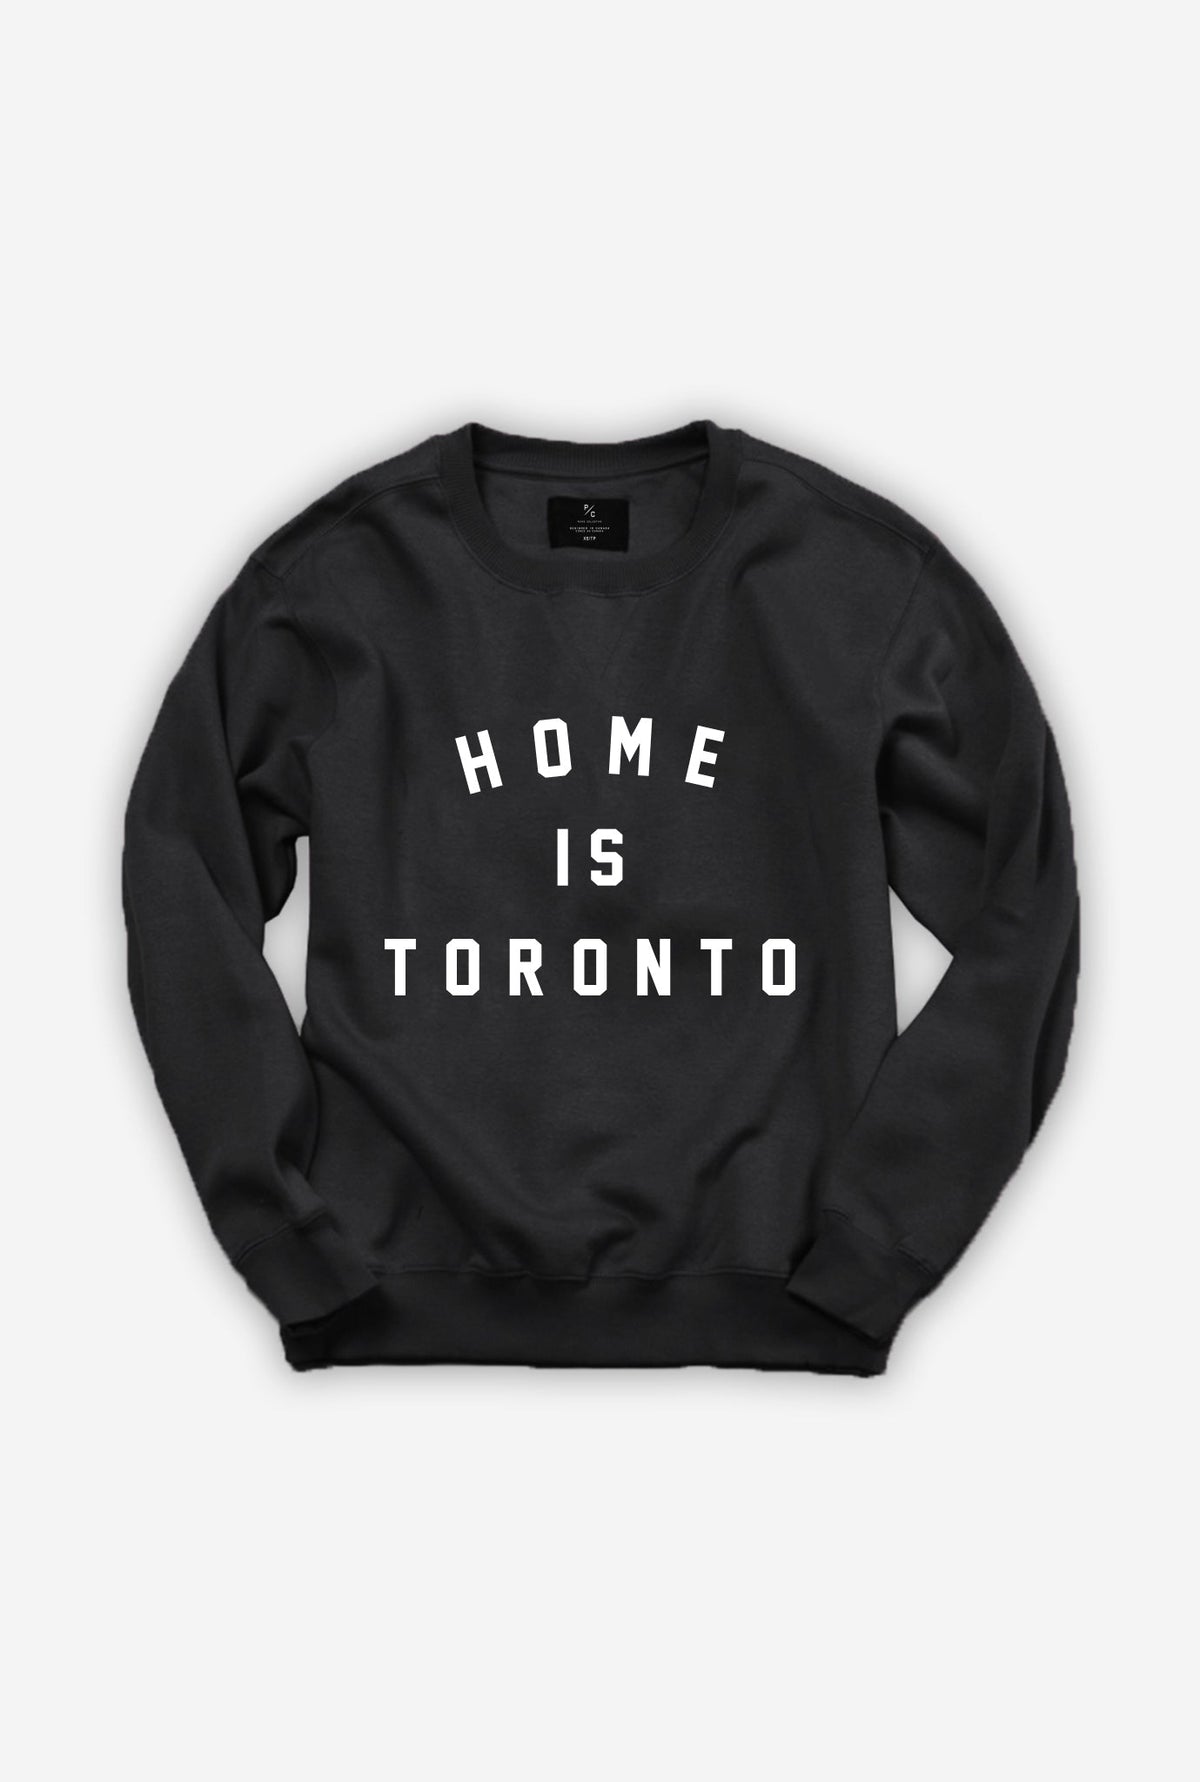 home is toronto crewneck sweater black